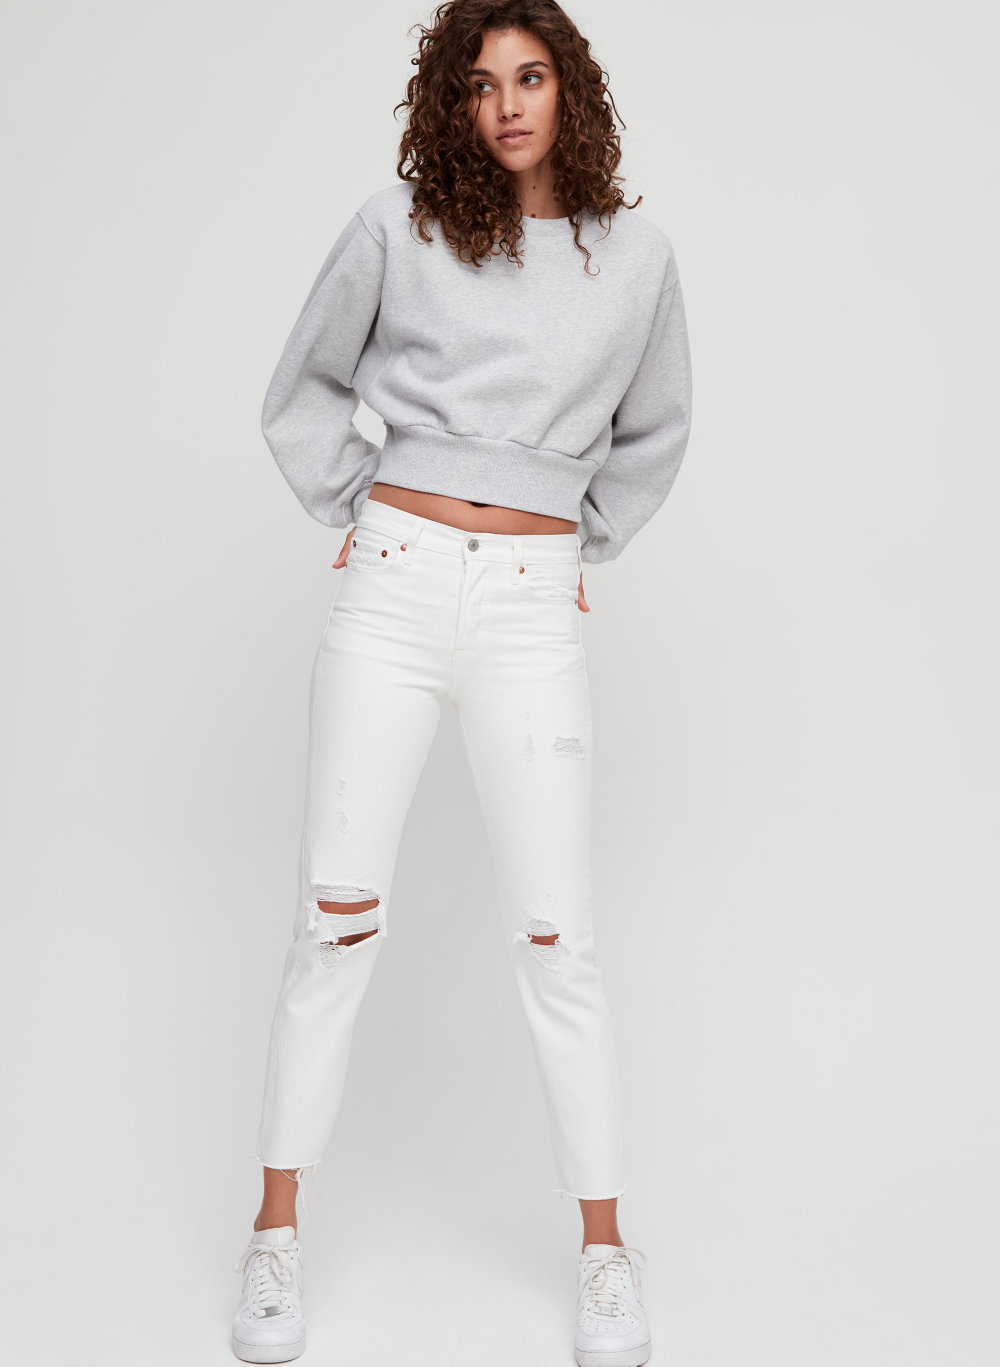 levis white jean